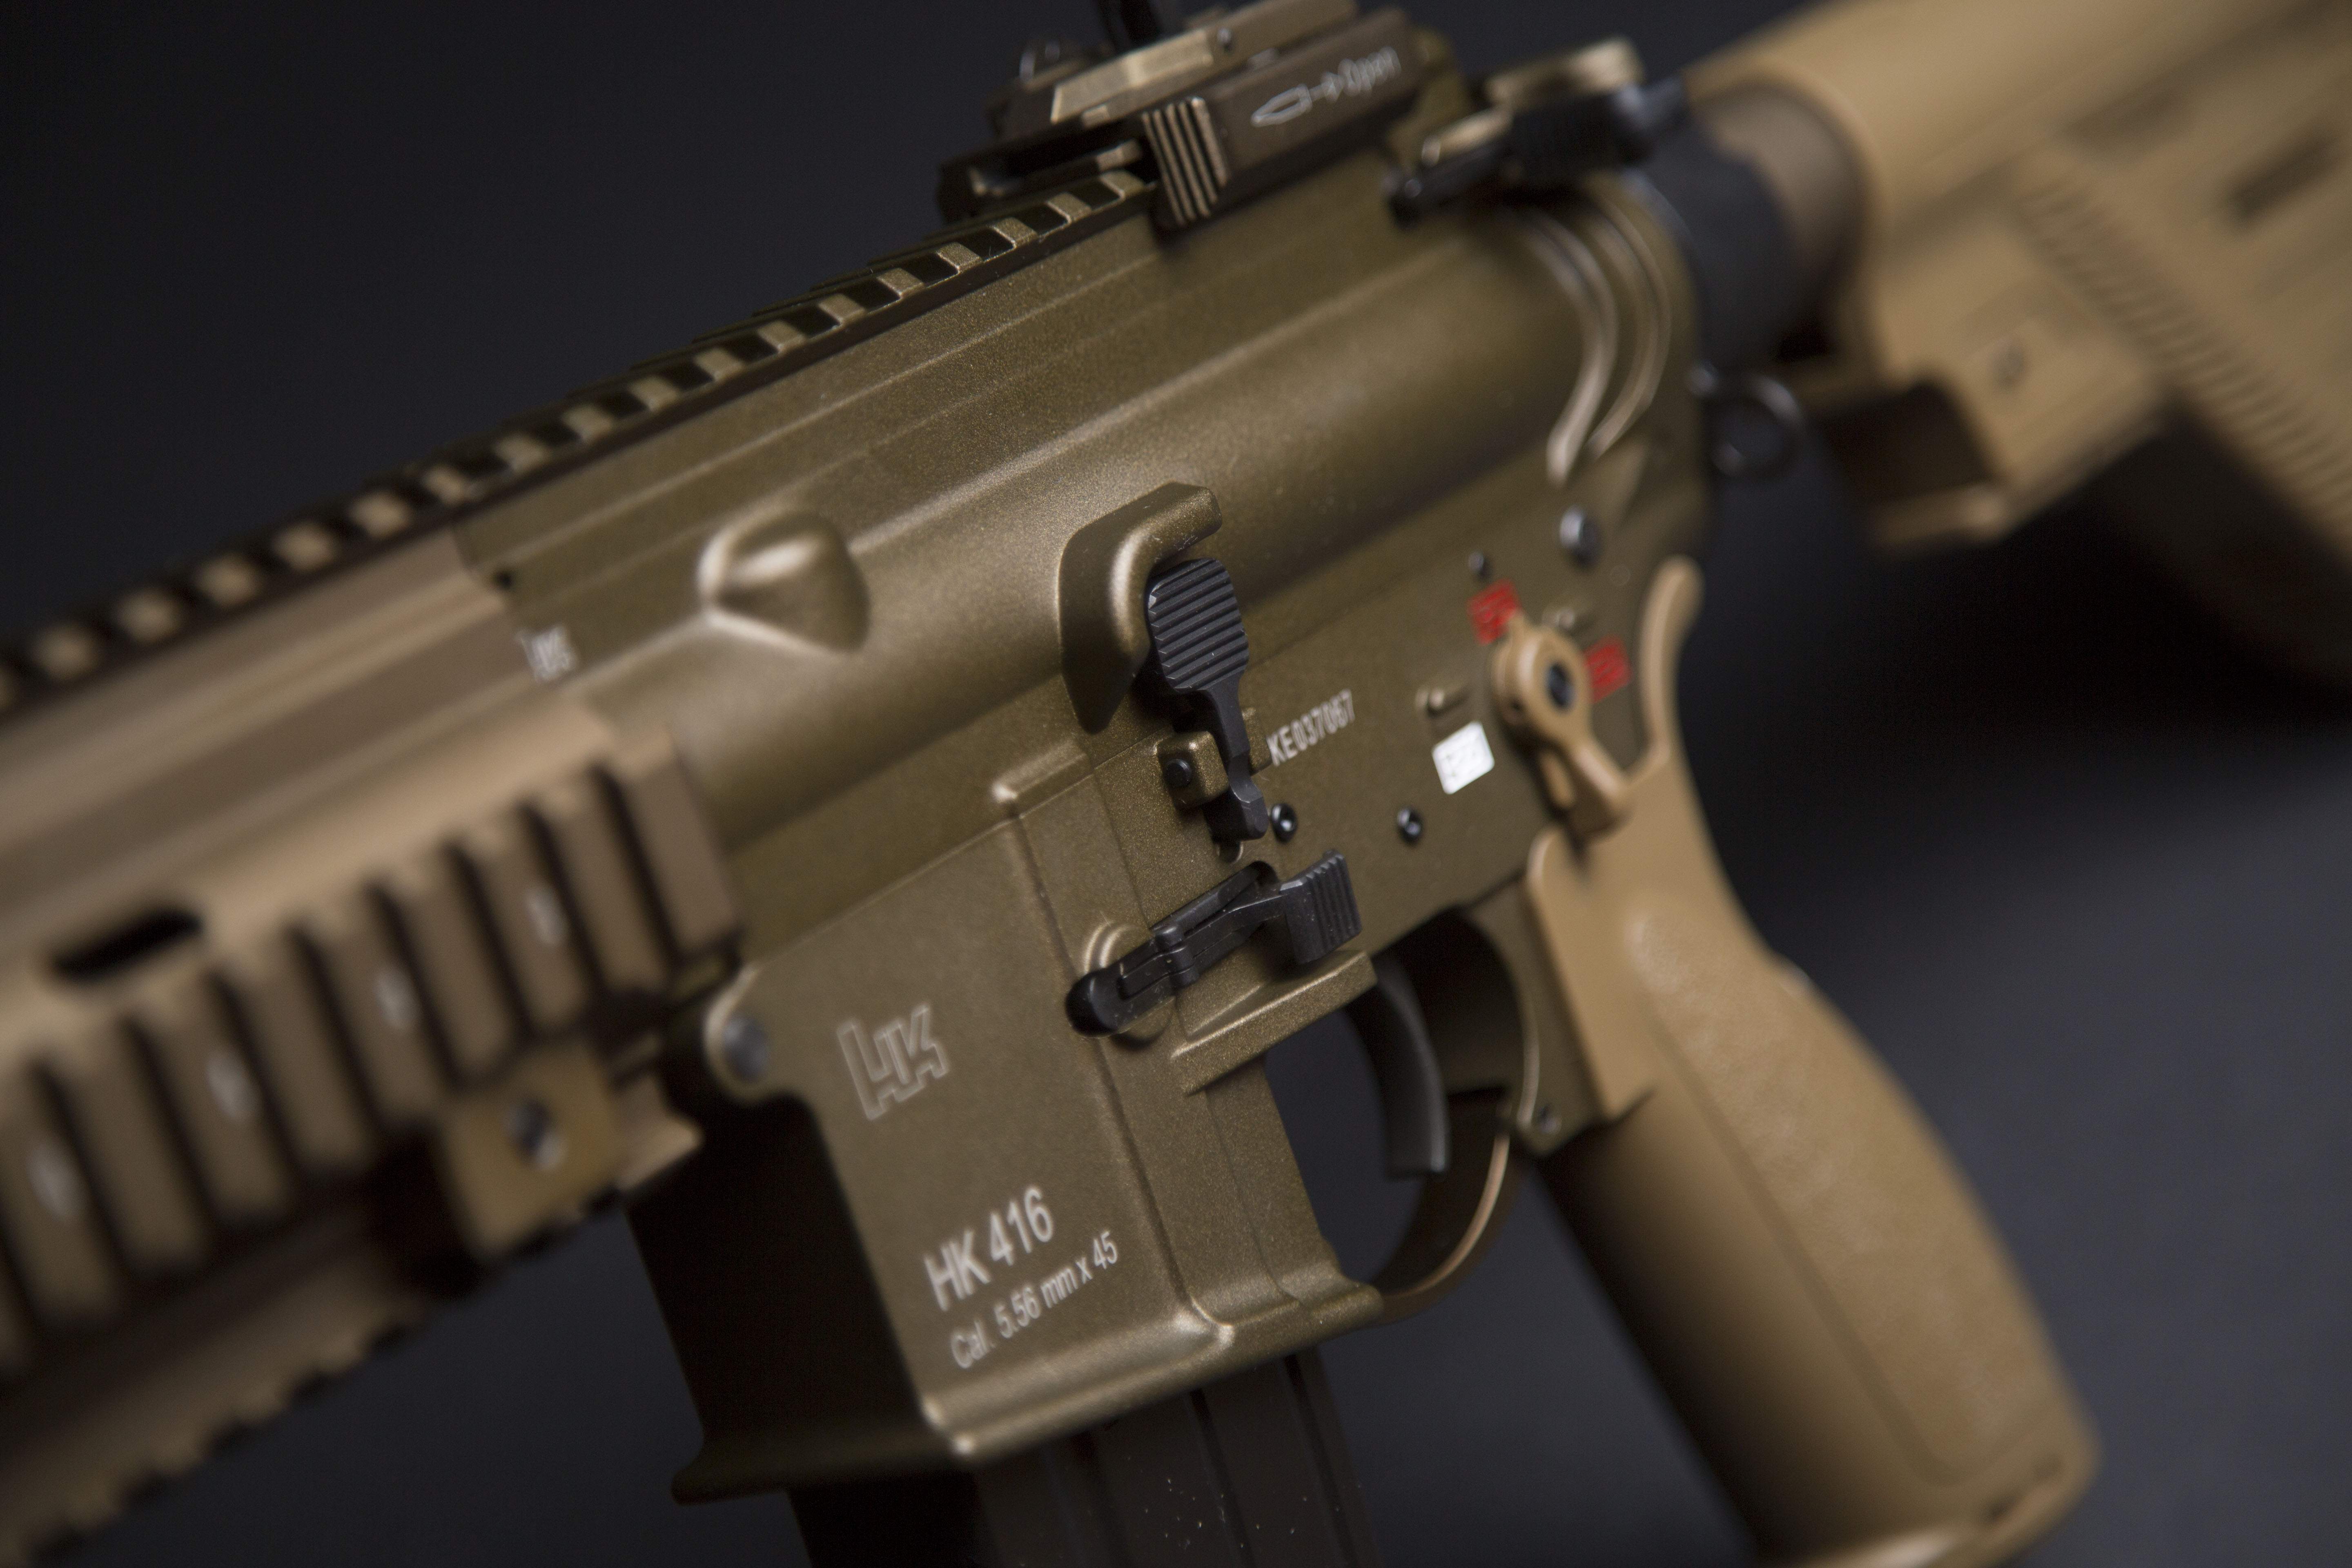 A gas replica of the Heckler&Koch assault rifle, the HK416 A5 brand...